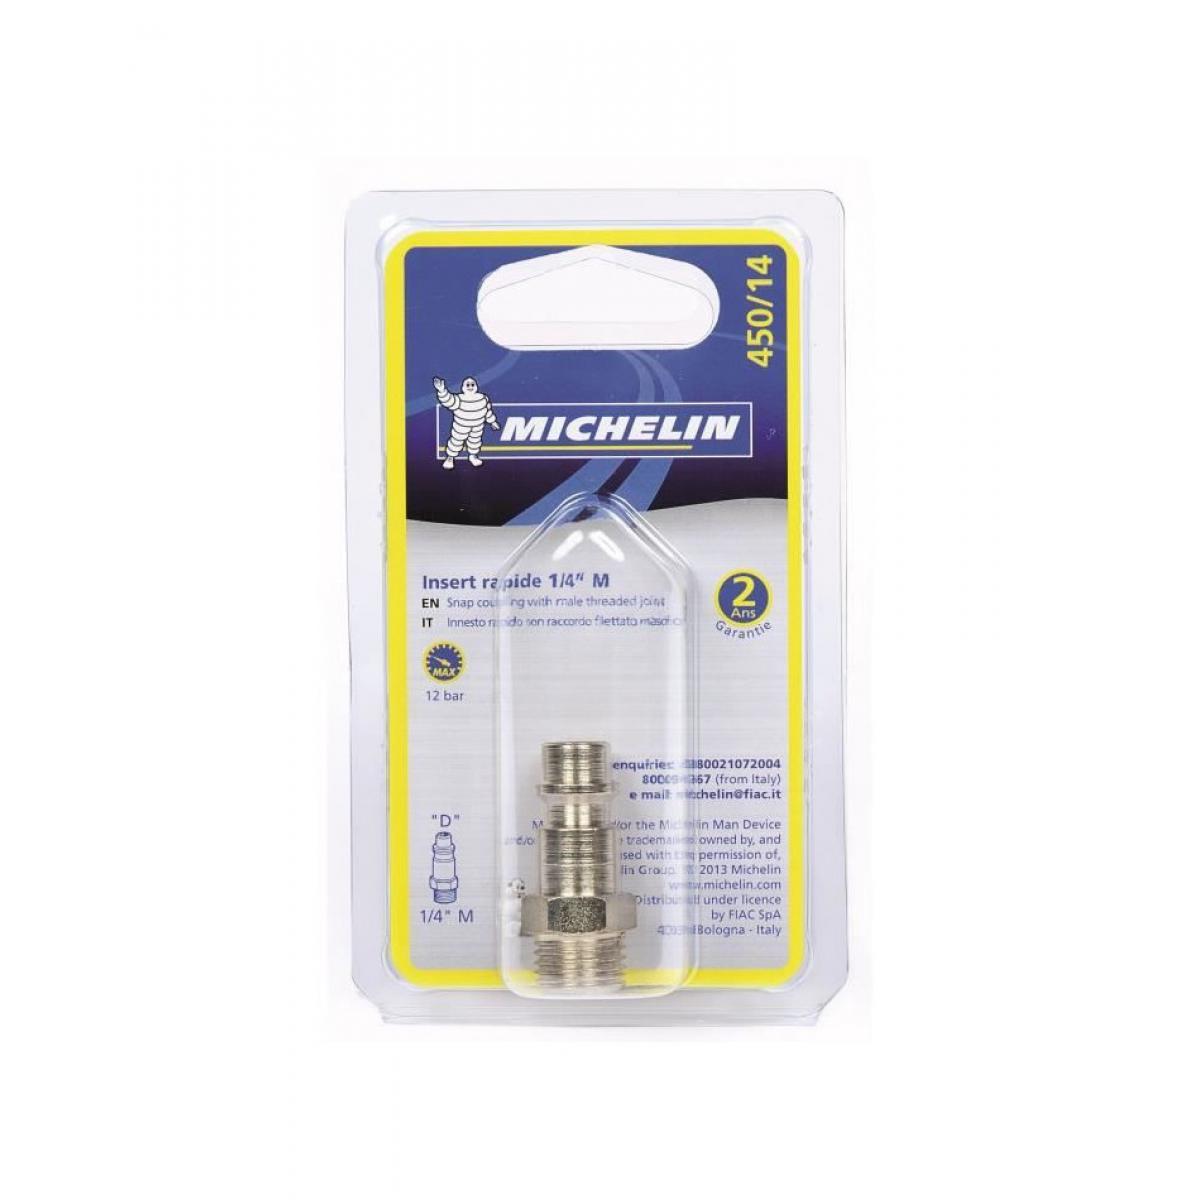 Michelin - MICHELIN Insert Rapide 1/4 M Blister - Accessoires compresseurs